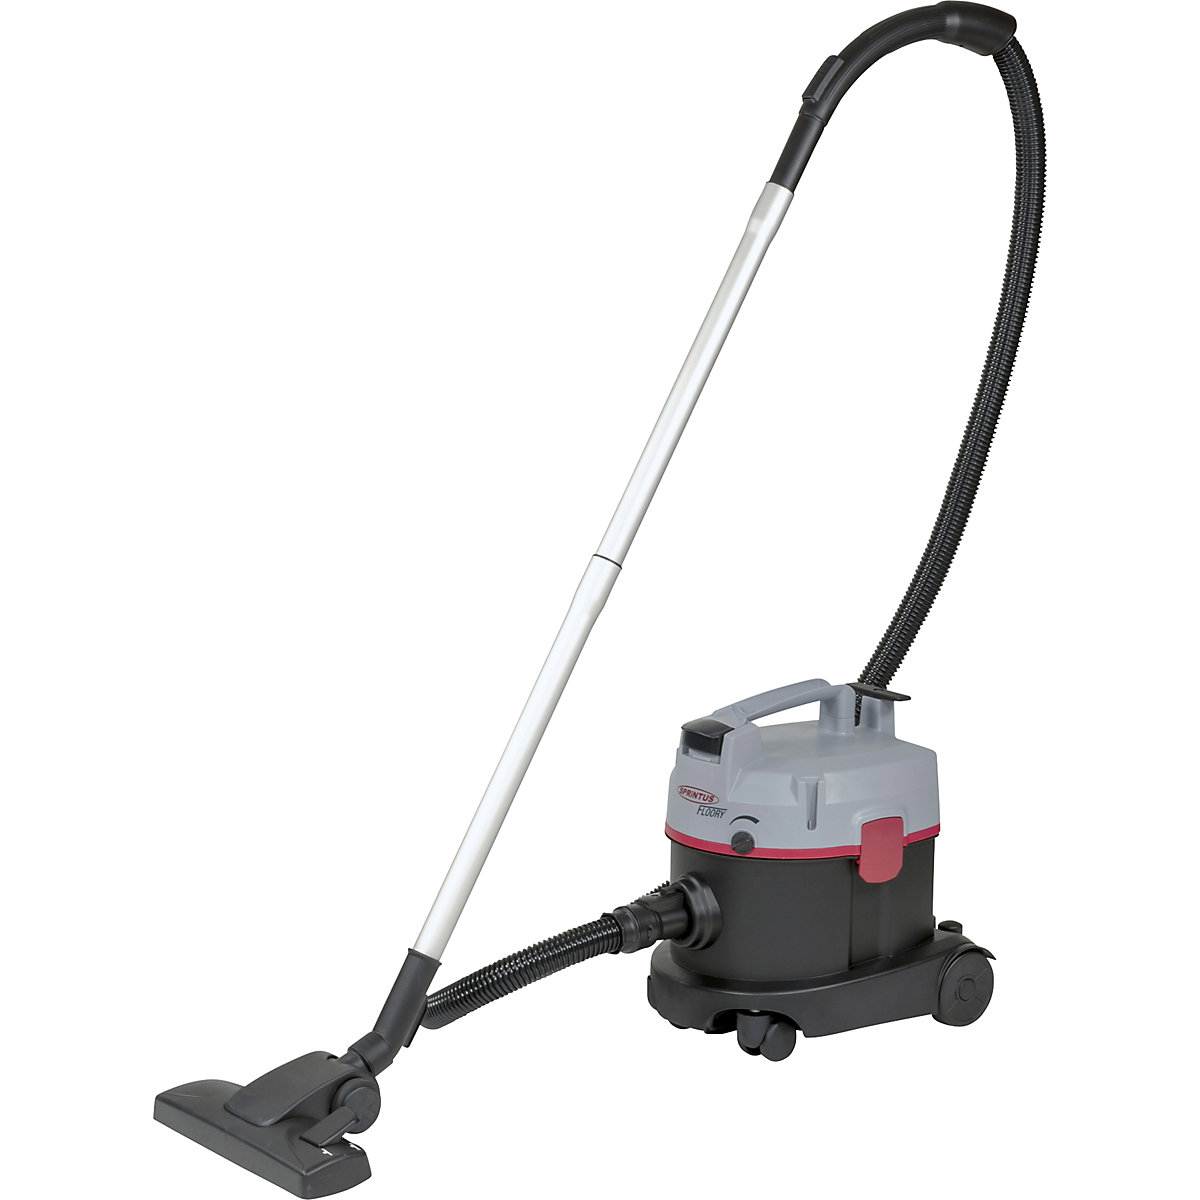 Dry vacuum cleaner, entry level class – Sprintus